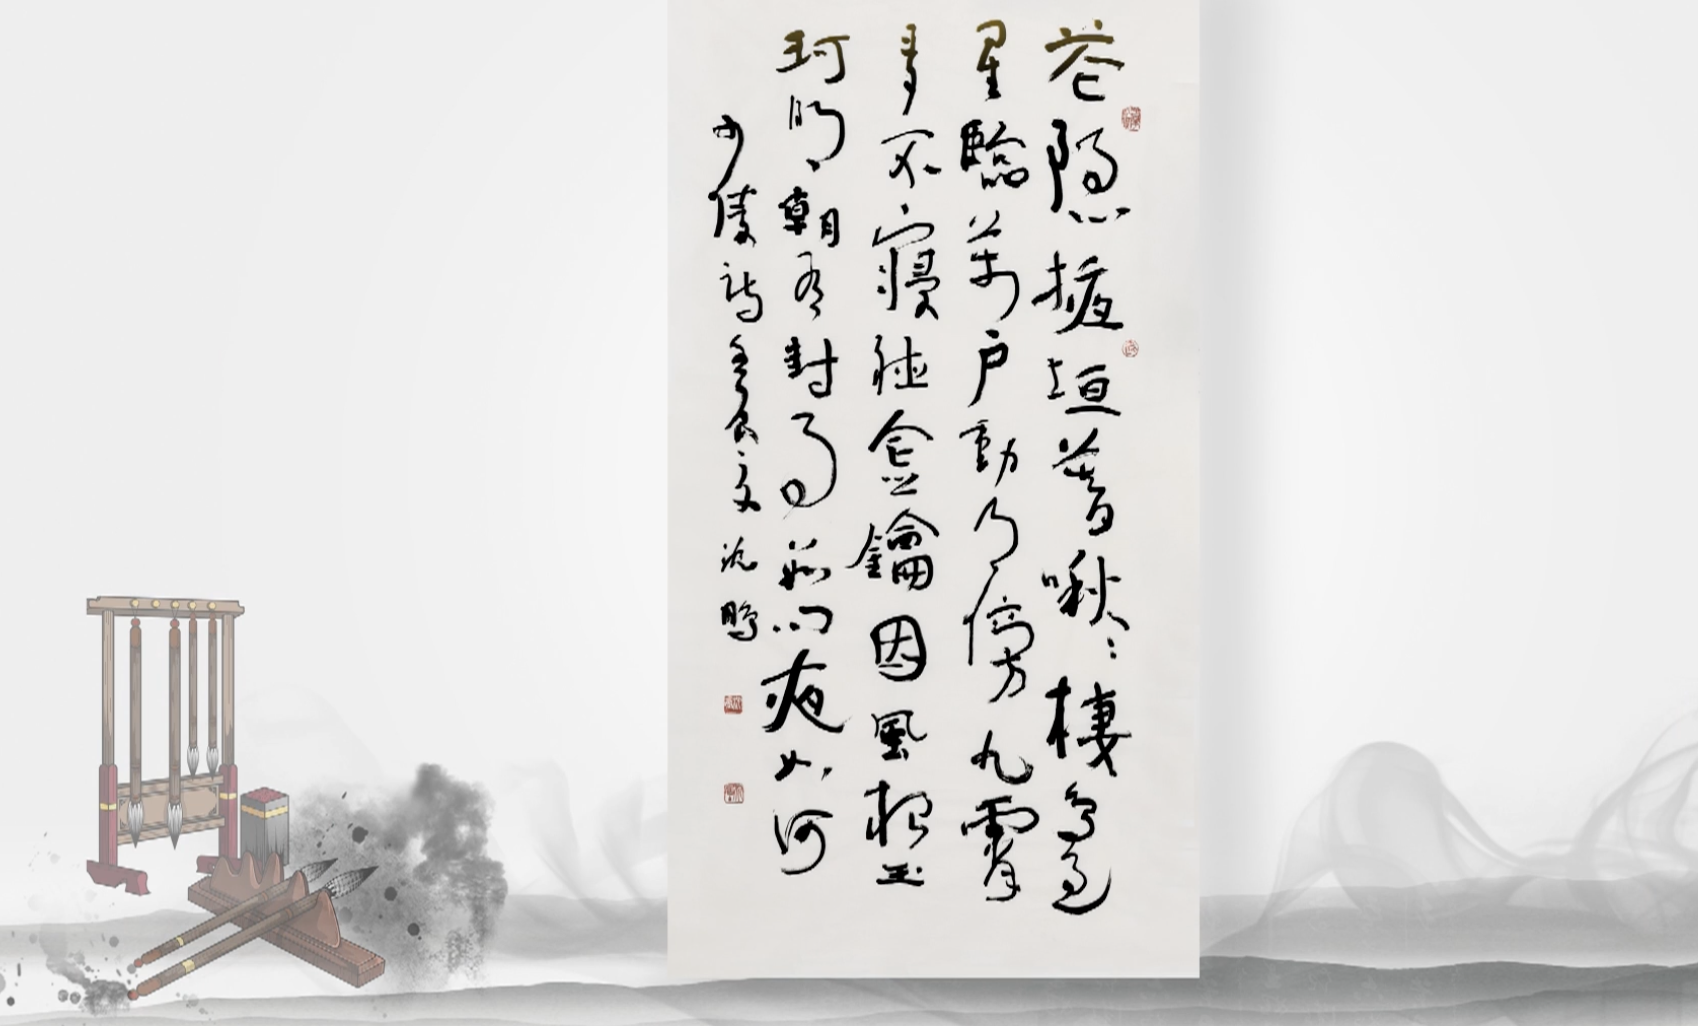 Ancient poet Du Fu's poem 